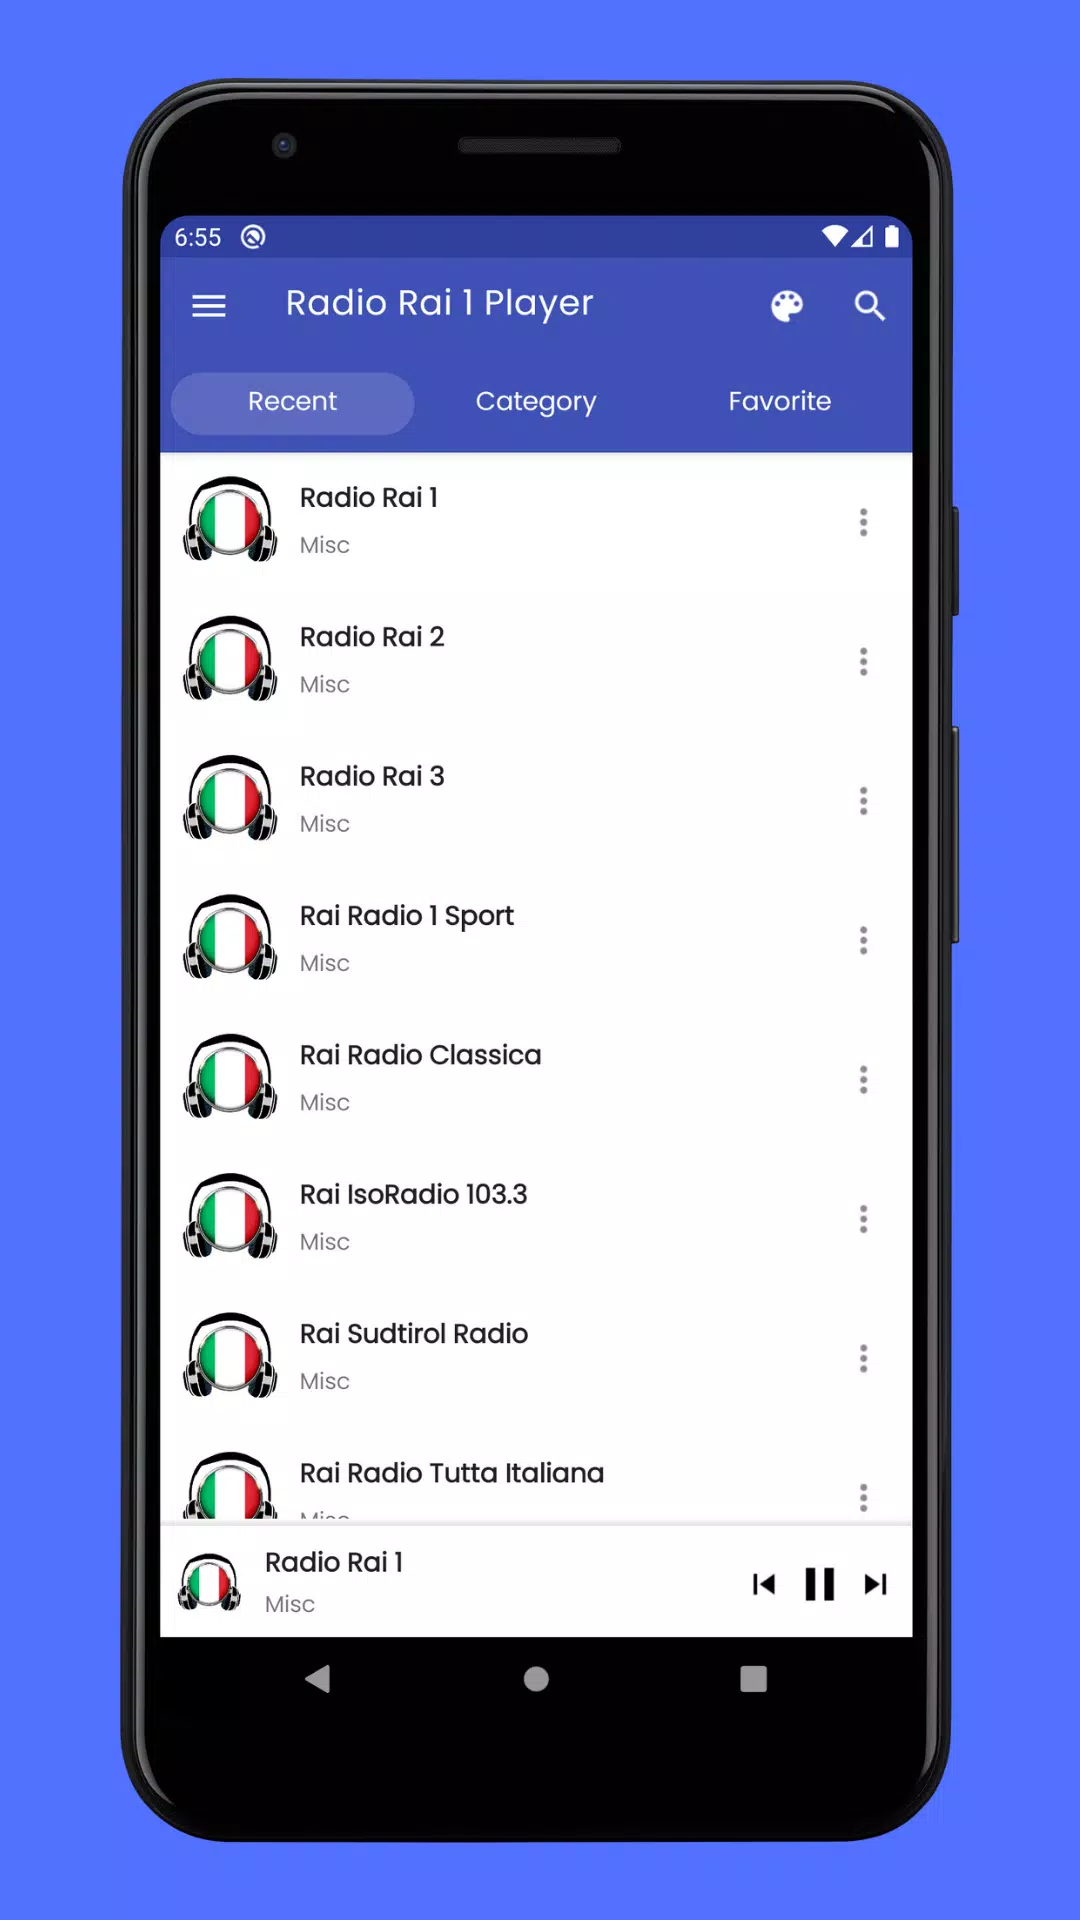 Radio Rai 1 Notizie App APK for Android Download